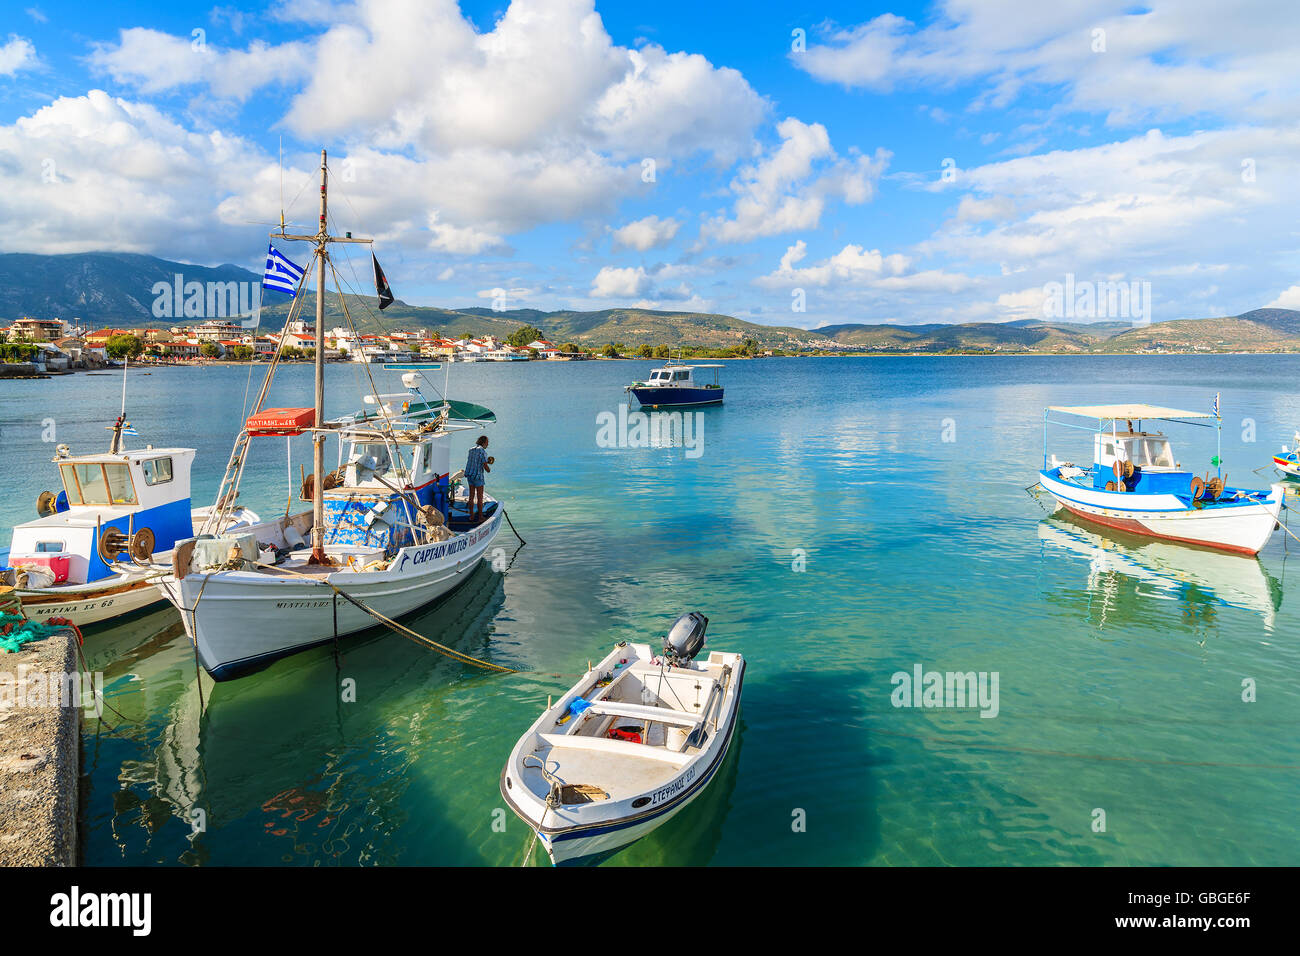 SAMOS ISLAND, GREECE - SEP 23, 2015: fisherman standing on Greek fishing boat mooring in port on Samos island, Greece. Stock Photo